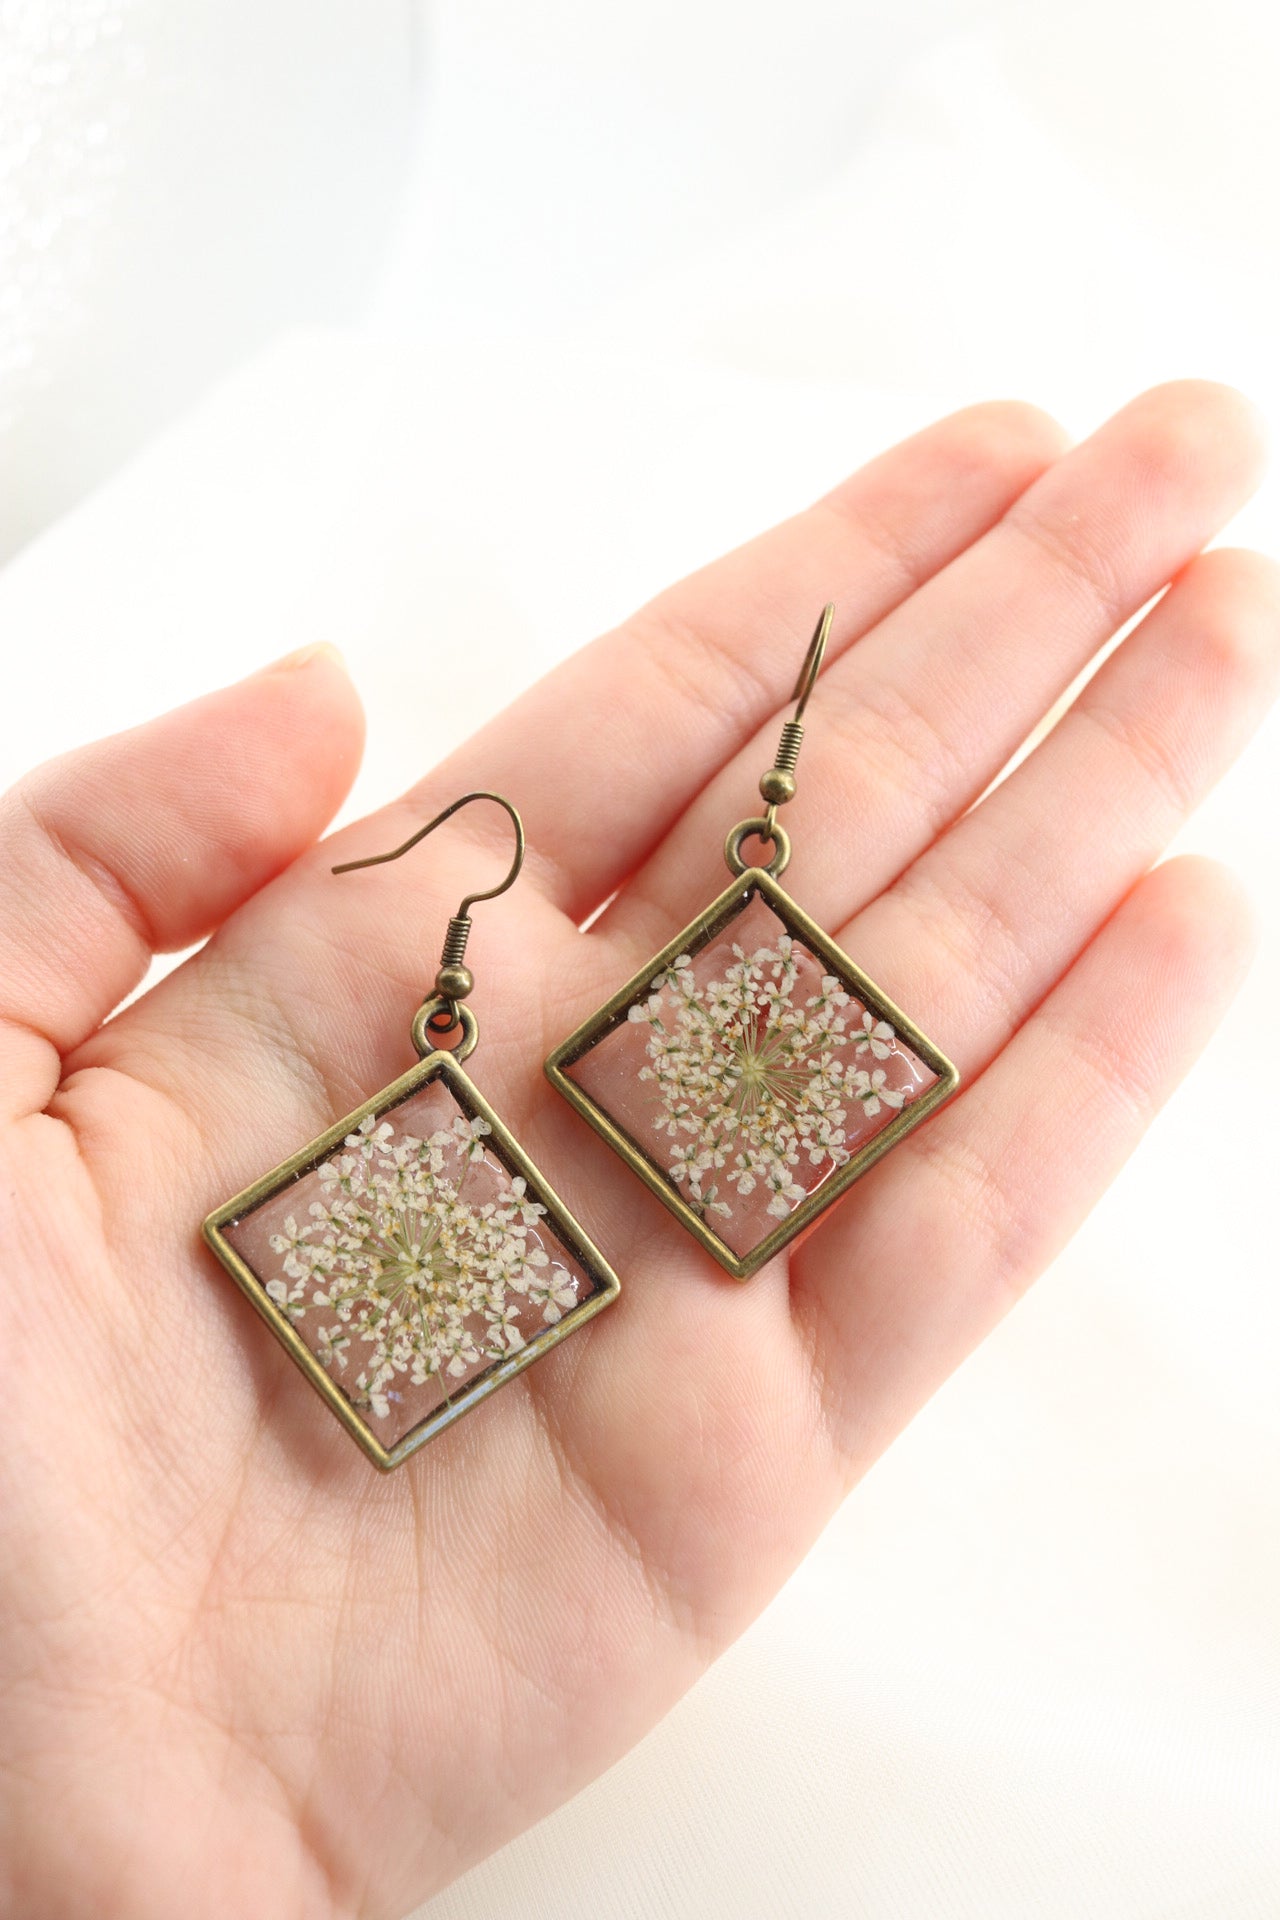 White Pressed Wildflower Resin Earrings, Vintage Bronze Square Earring, Botanical Dried Flower Earrings, Holiday Gift For Her